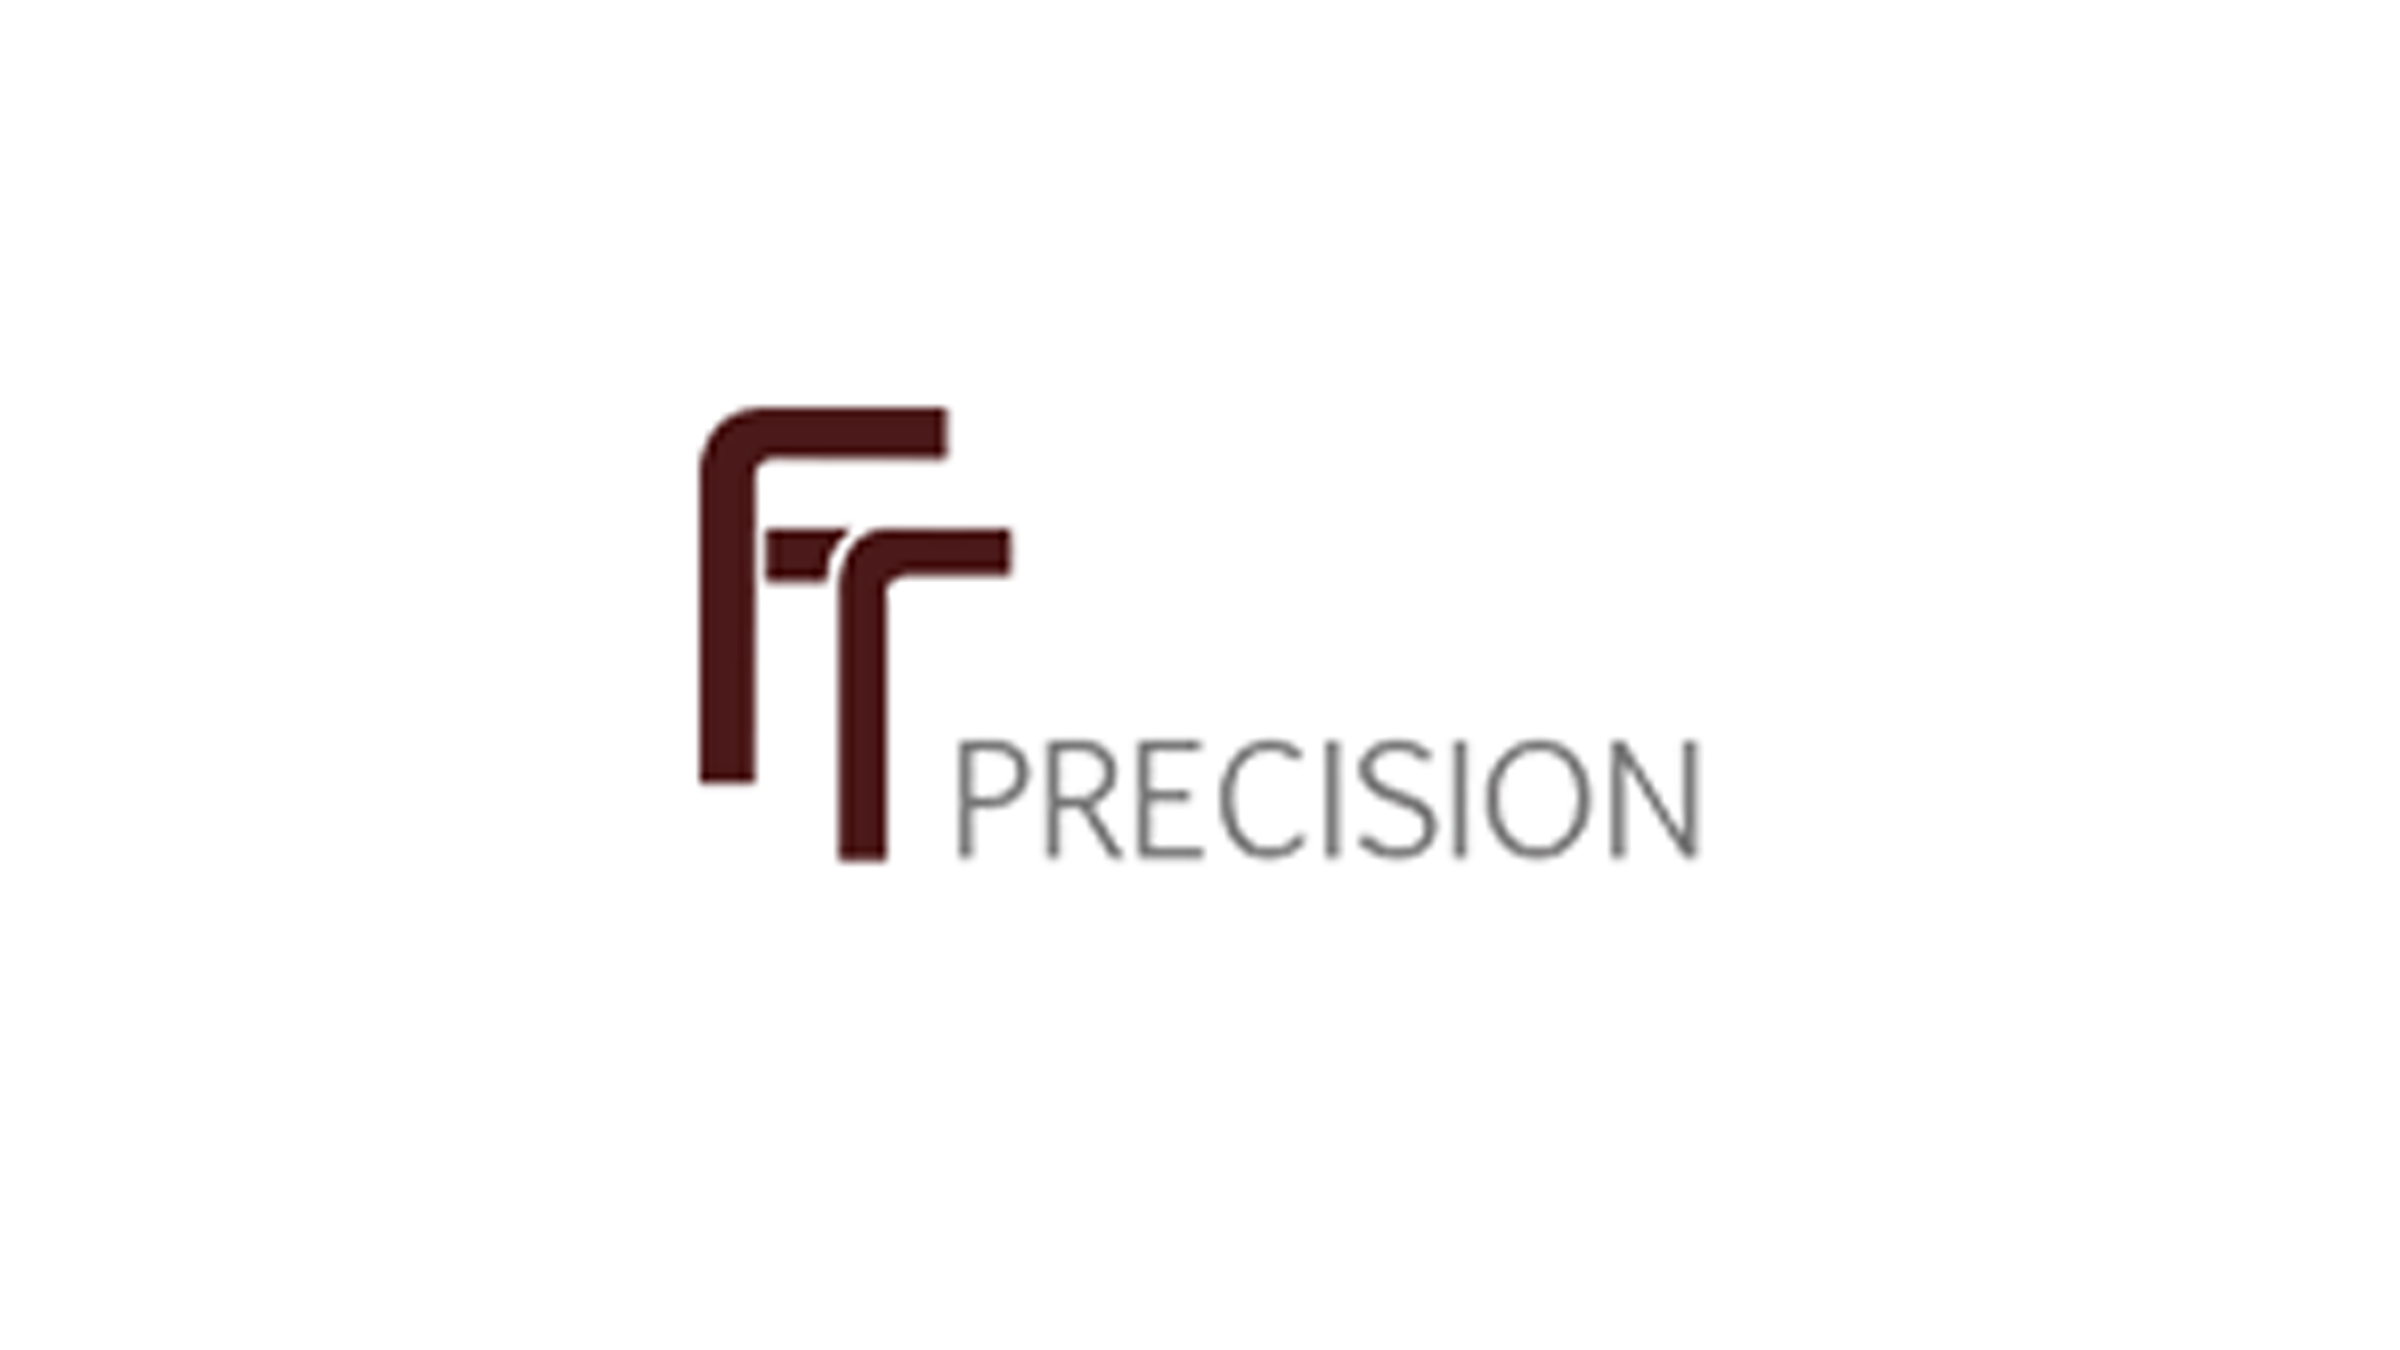 FT precision company logo